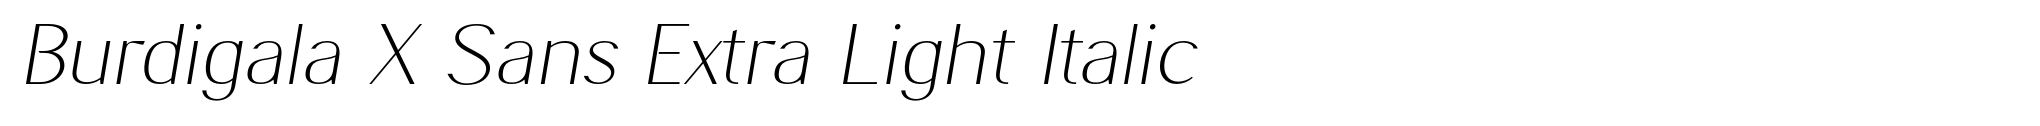 Burdigala X Sans Extra Light Italic image